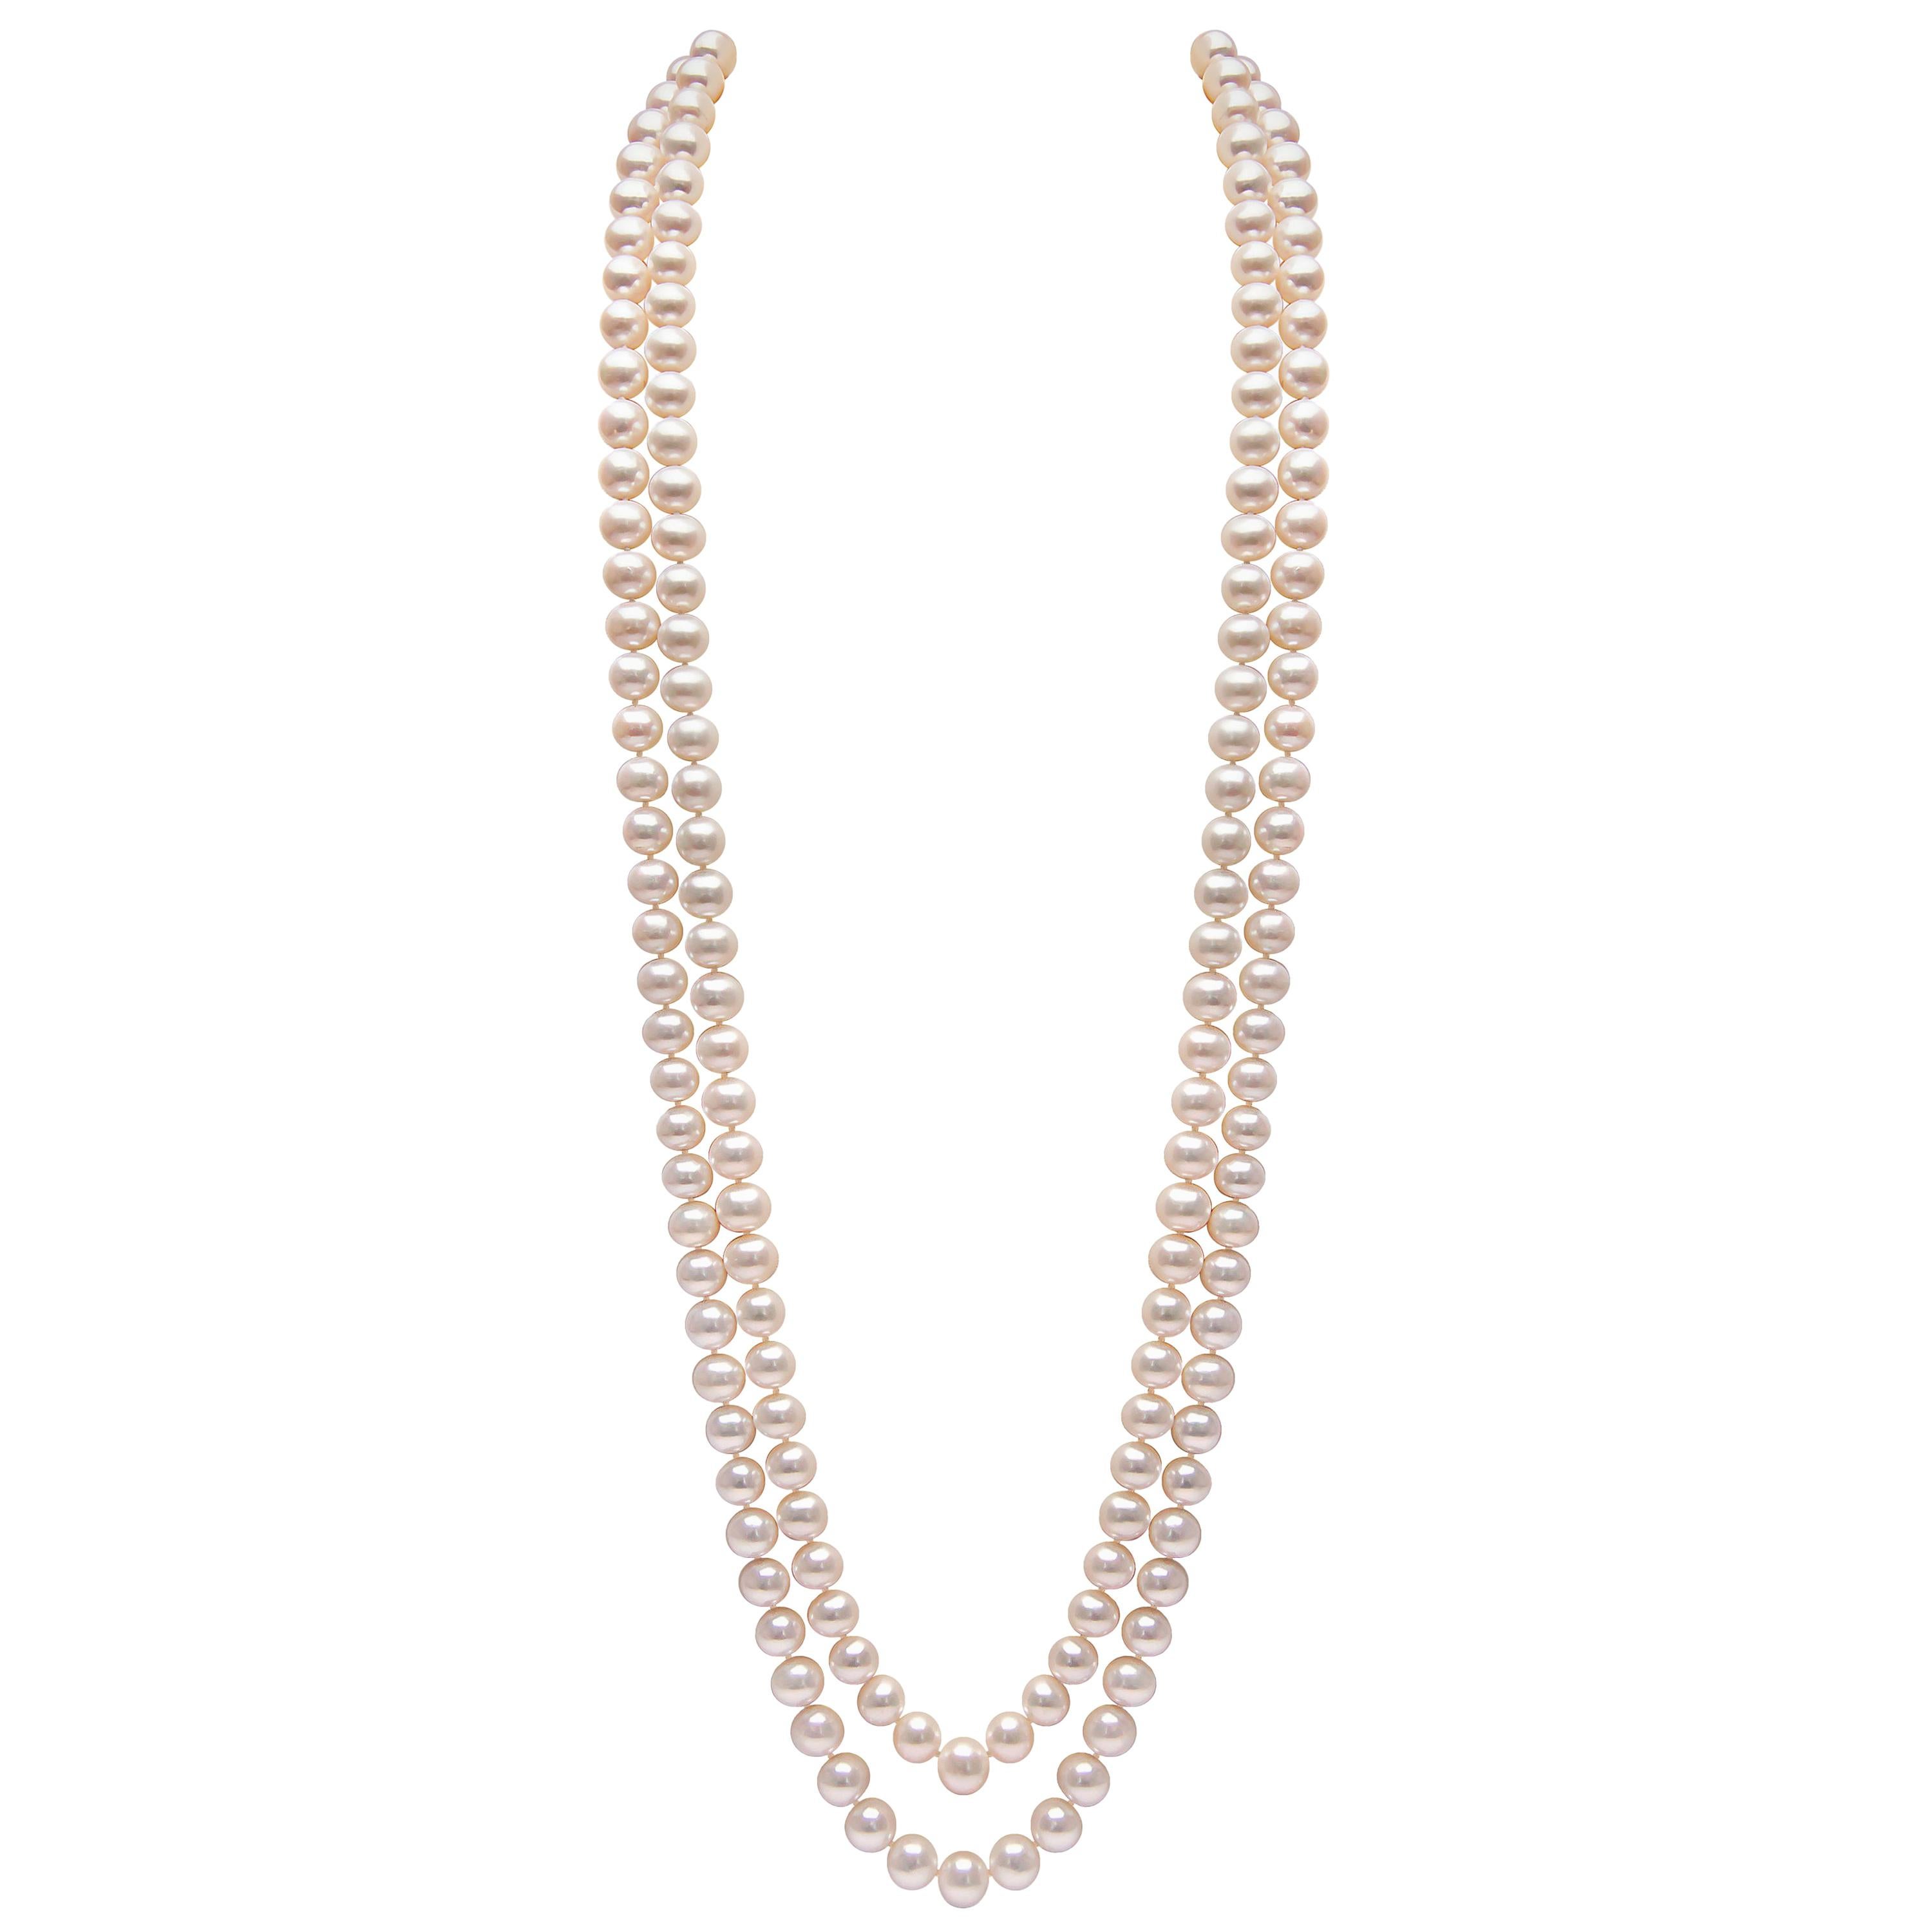 Yoko London Collier de perles d'eau douce en forme de corde